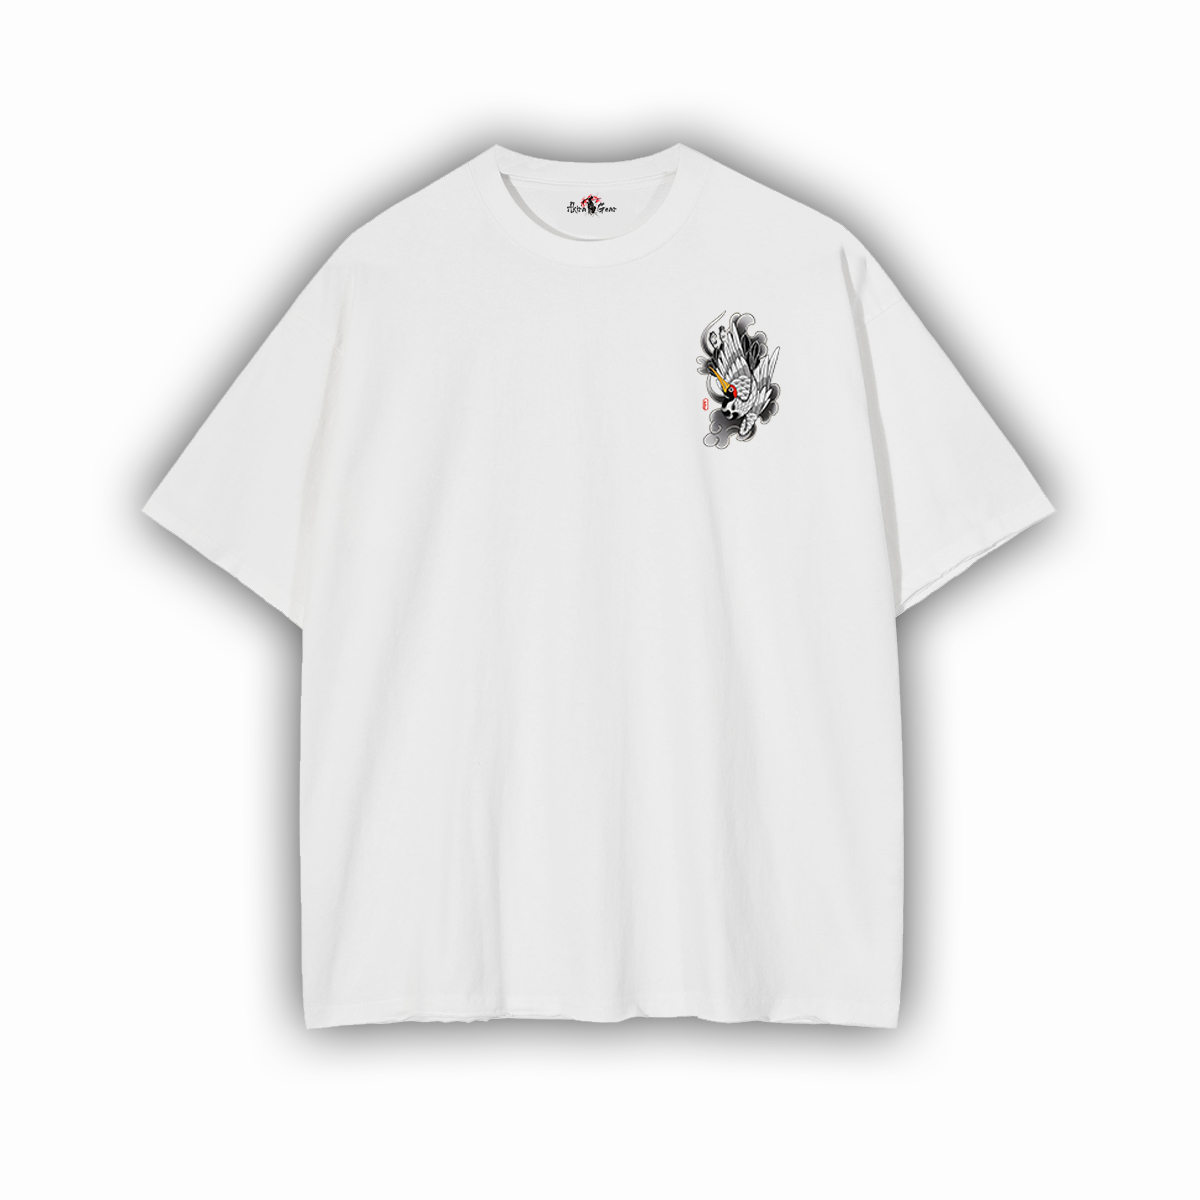 Japanese Streewear T-shirts